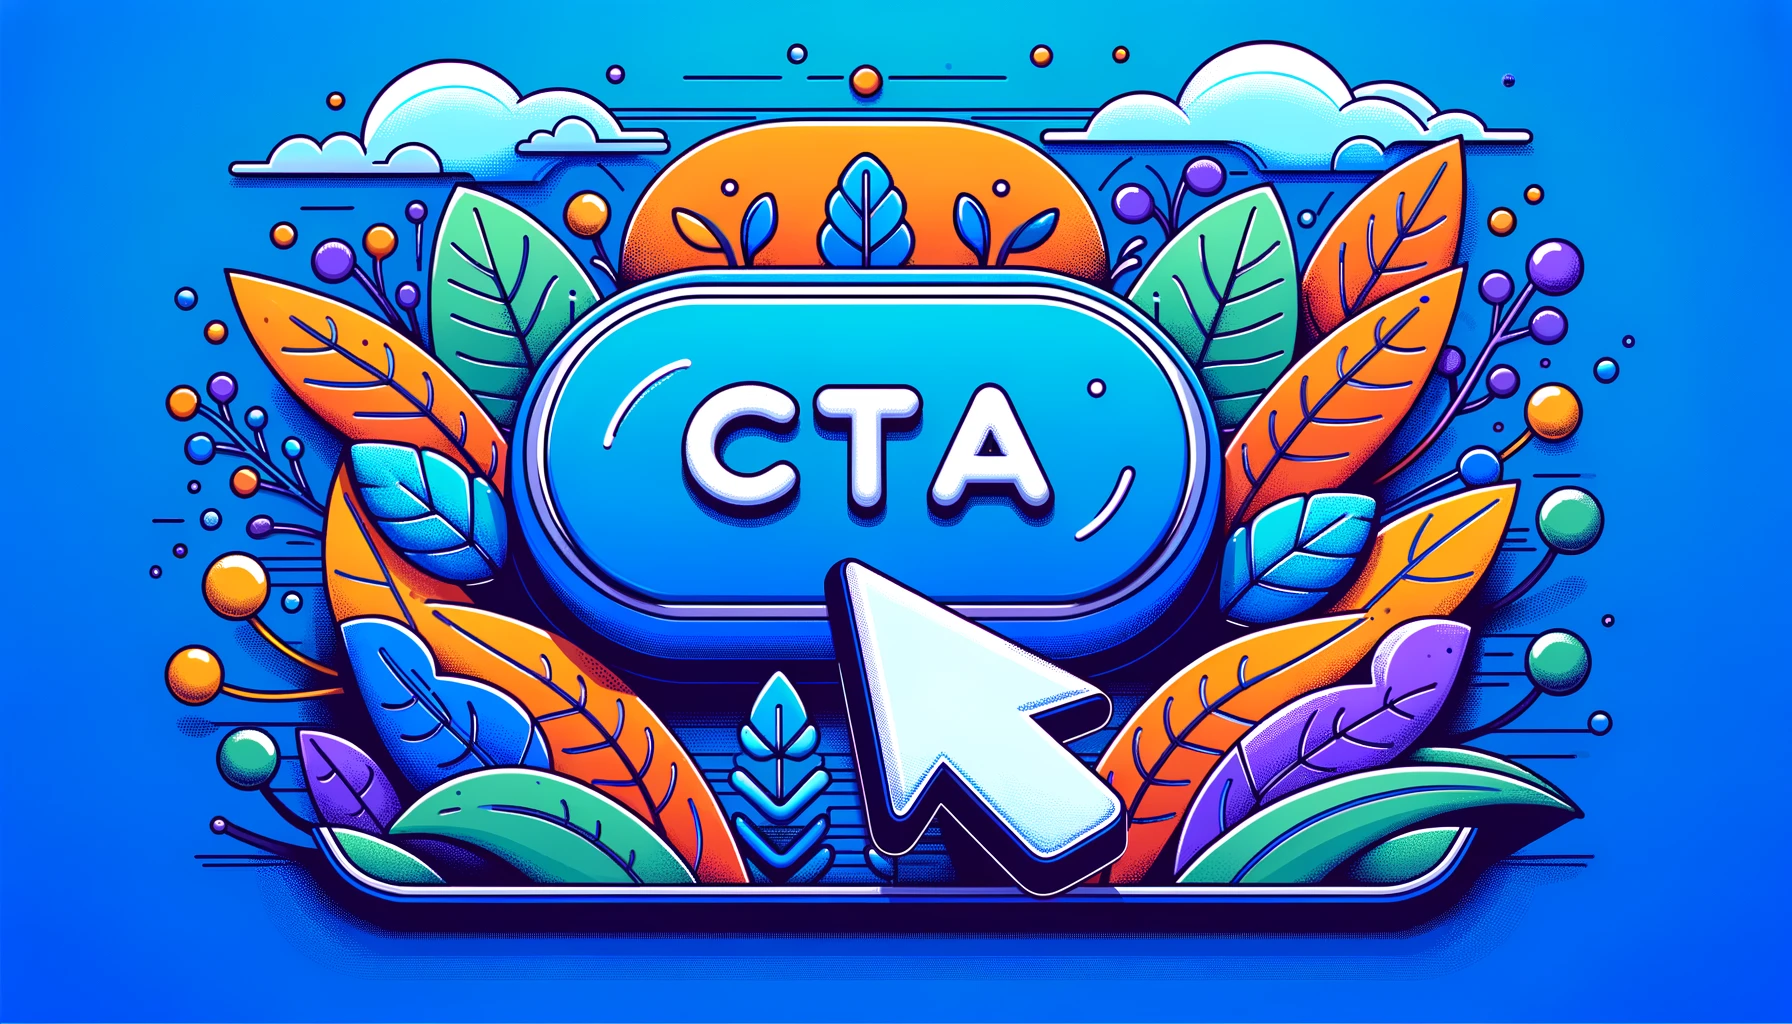 cta cover - button and cursor